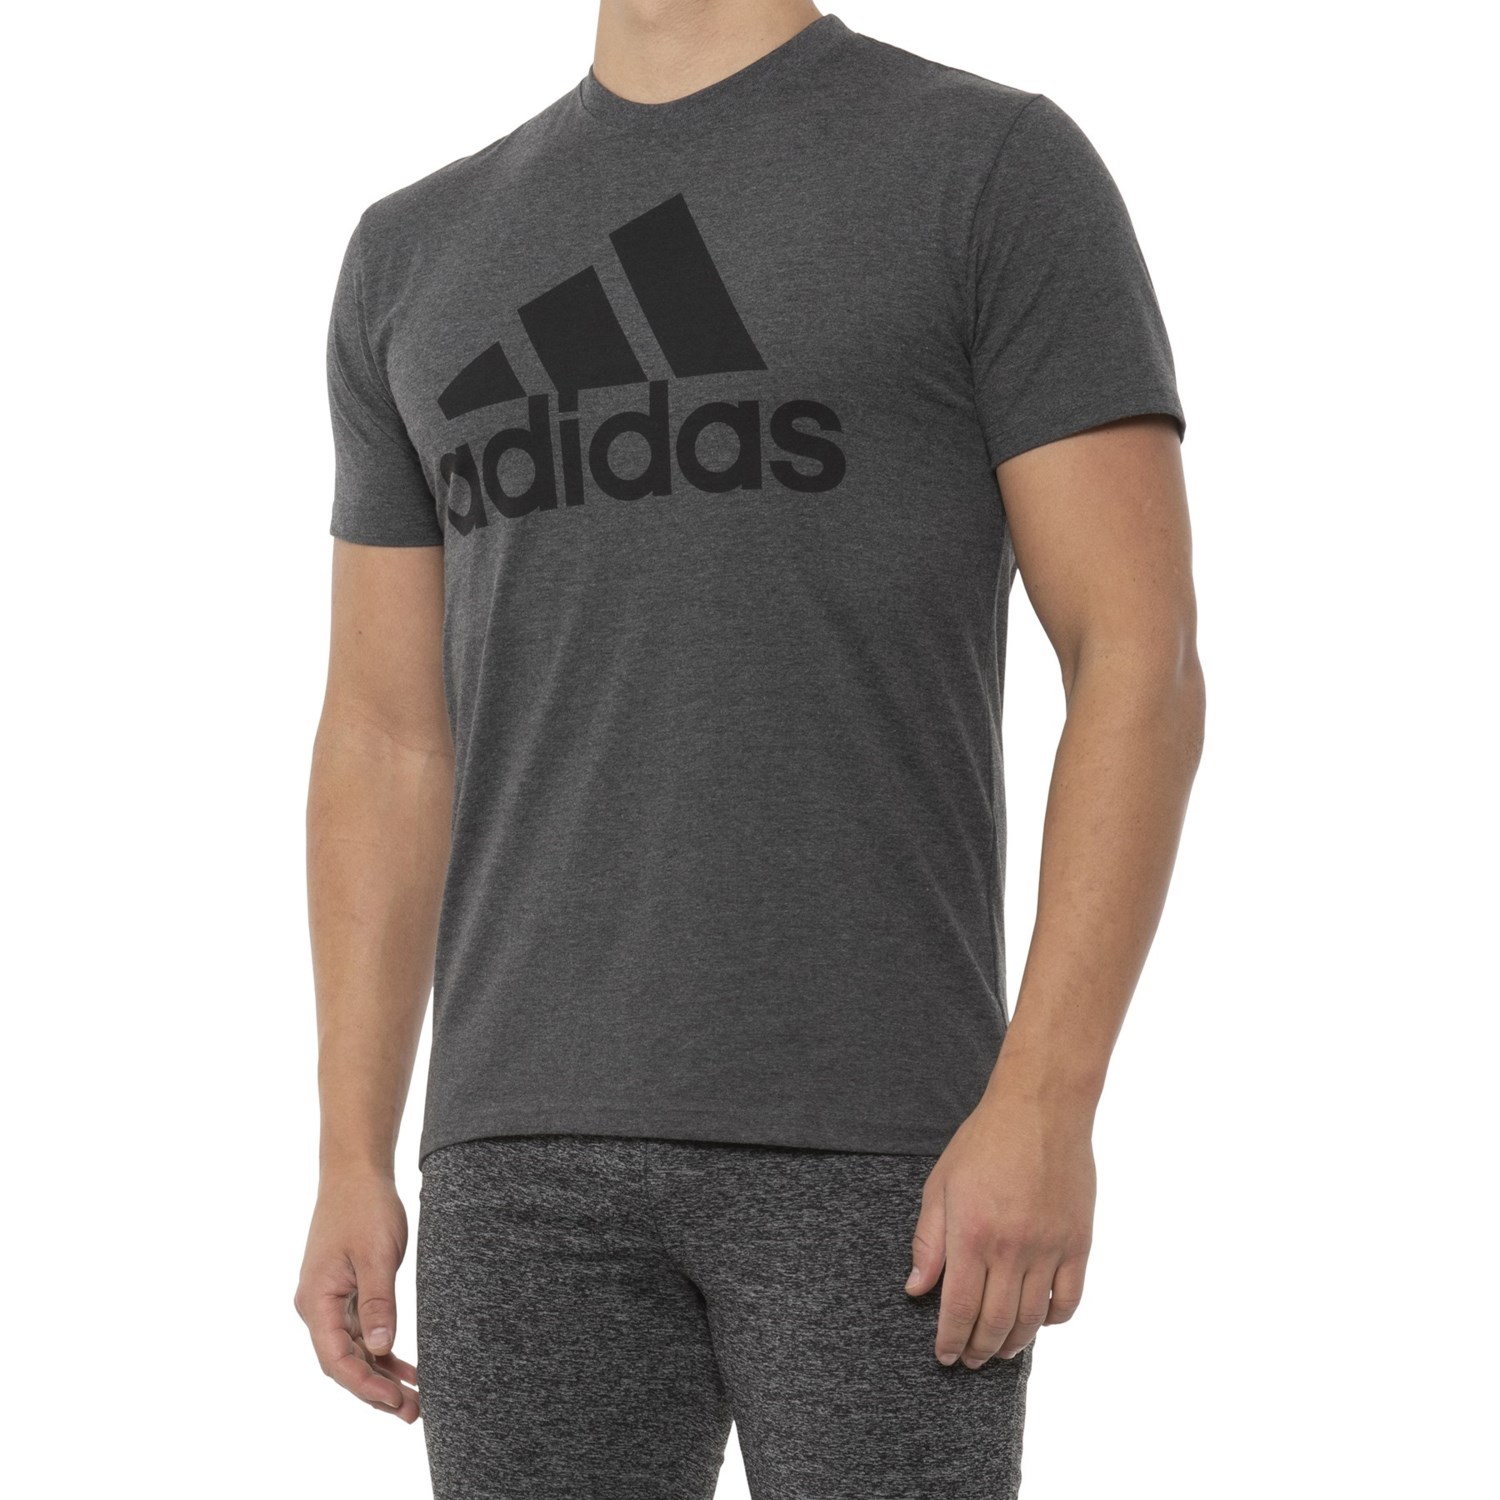 Adidas Logo Mountain T-Shirt - Short Sleeve (For Men)